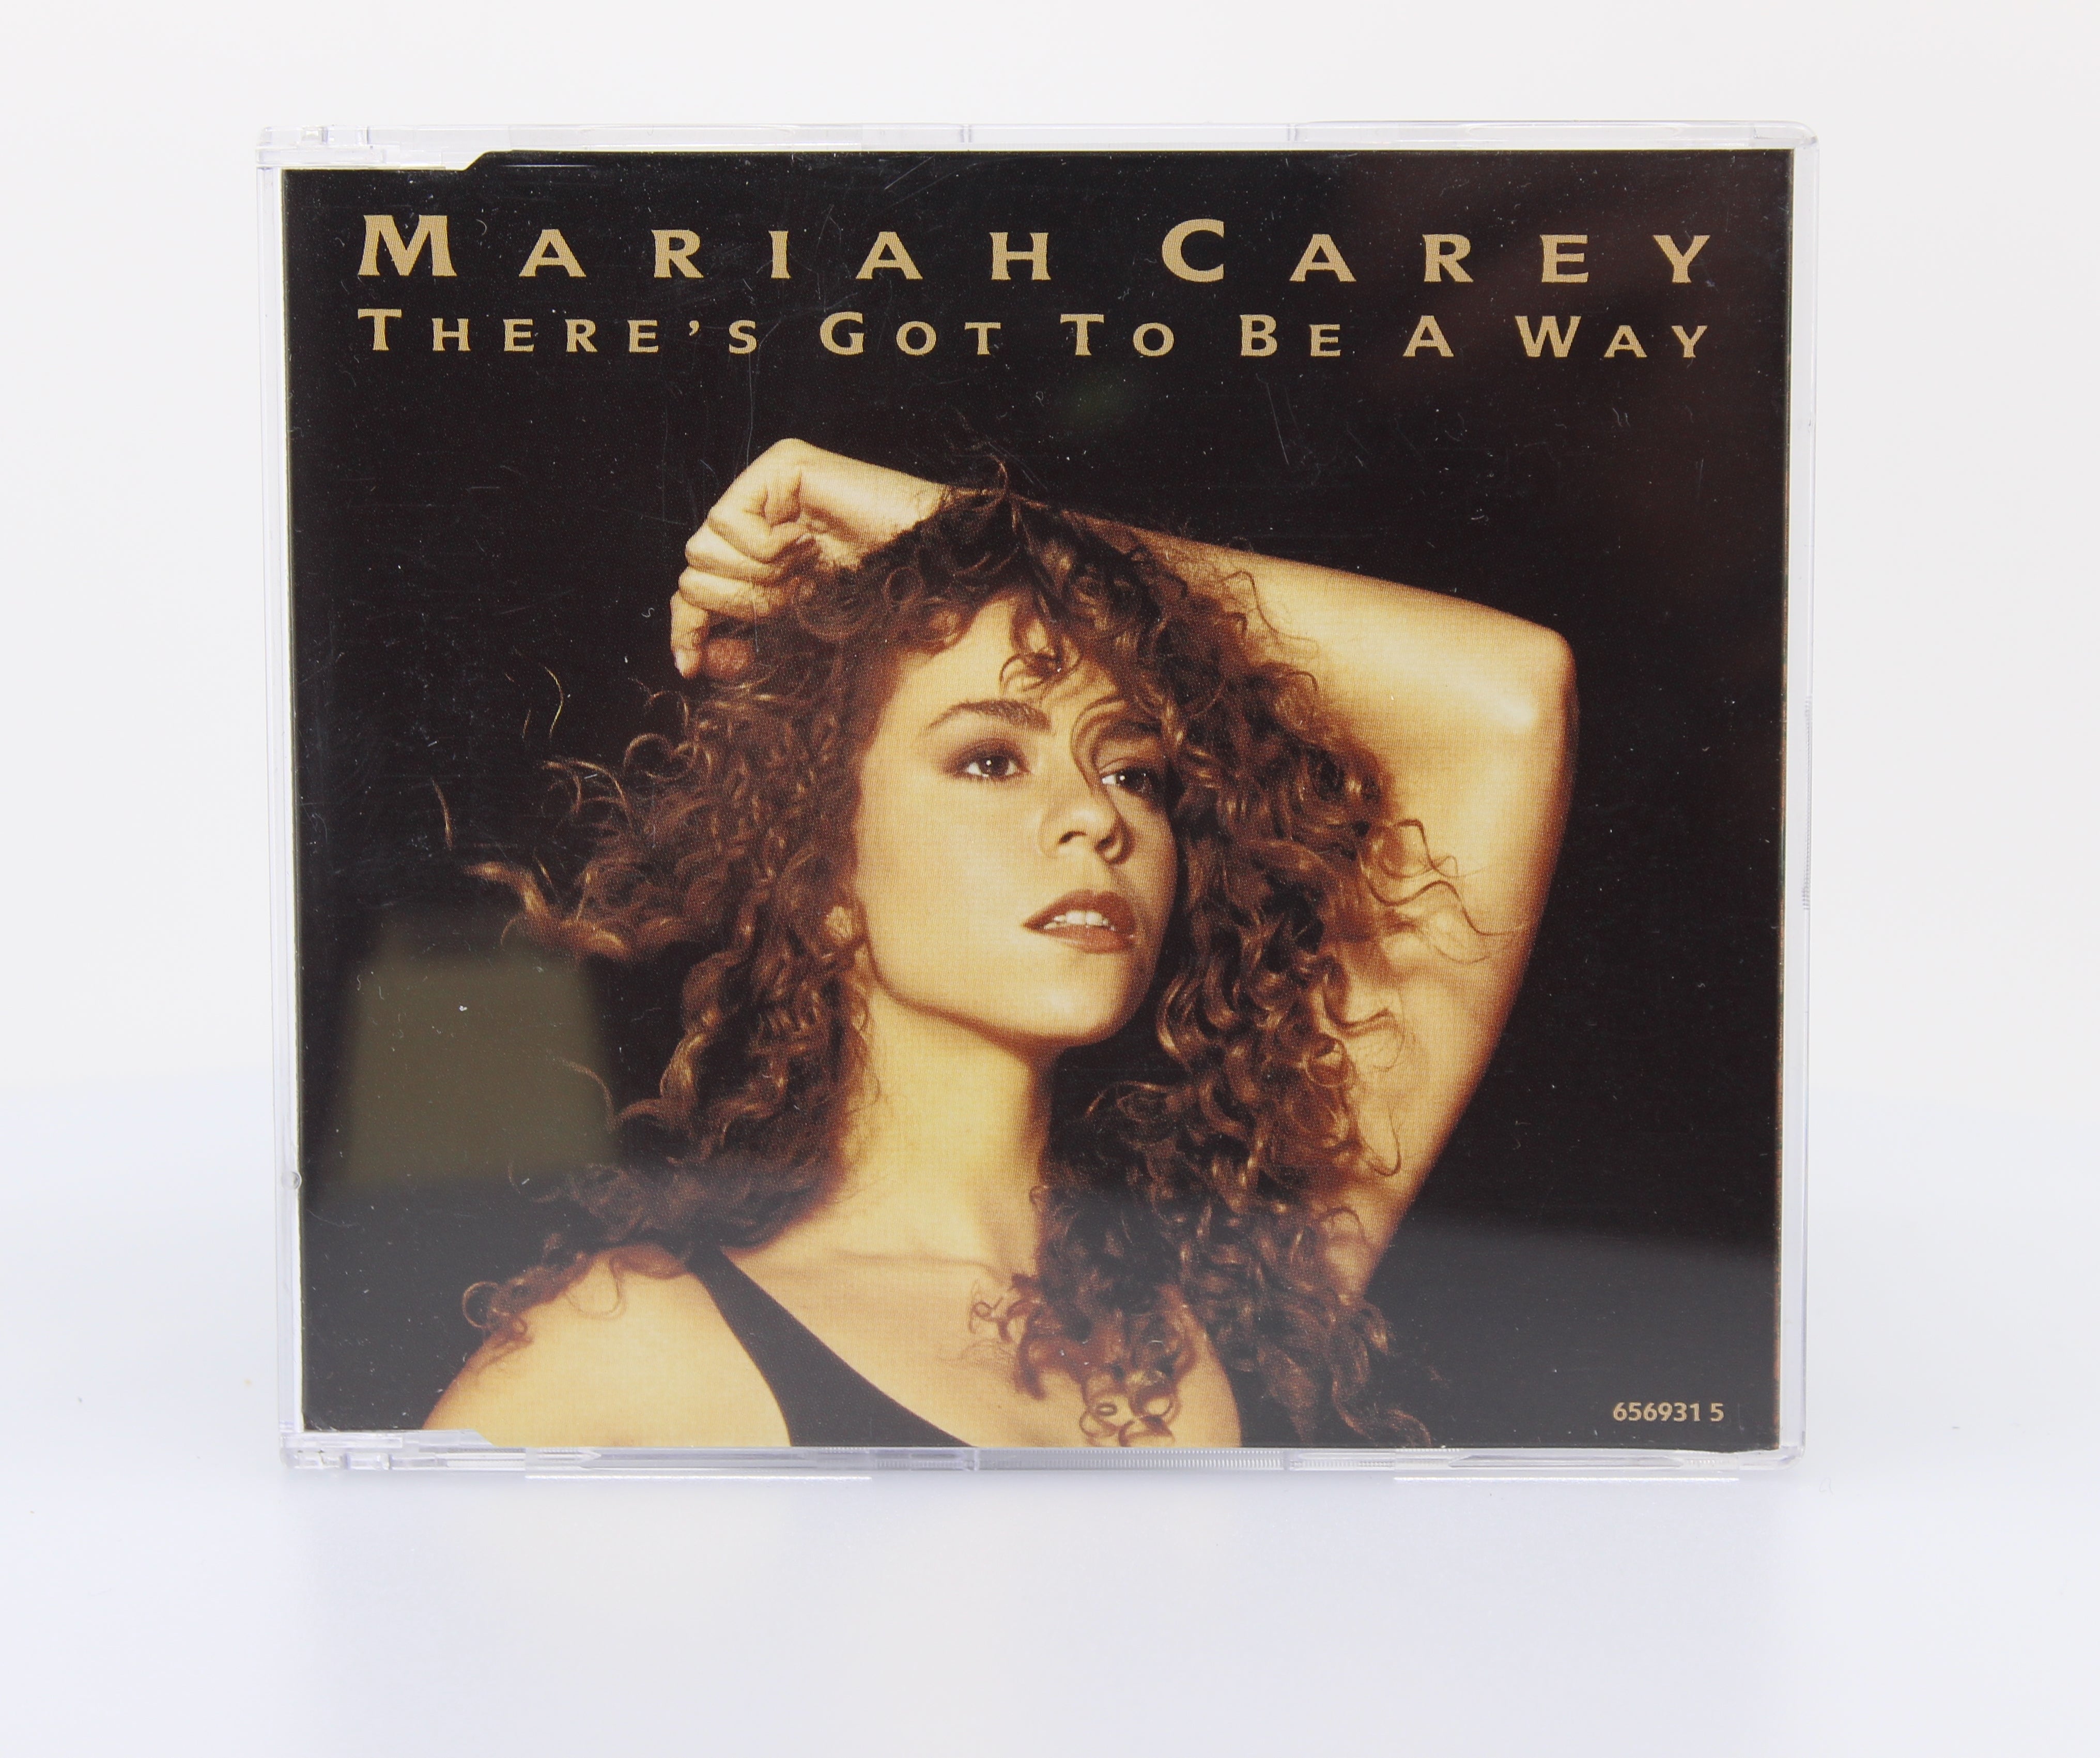 Mariah Carey, There's Got To Be A Way, CD Single, UK 1991 (CD 658 